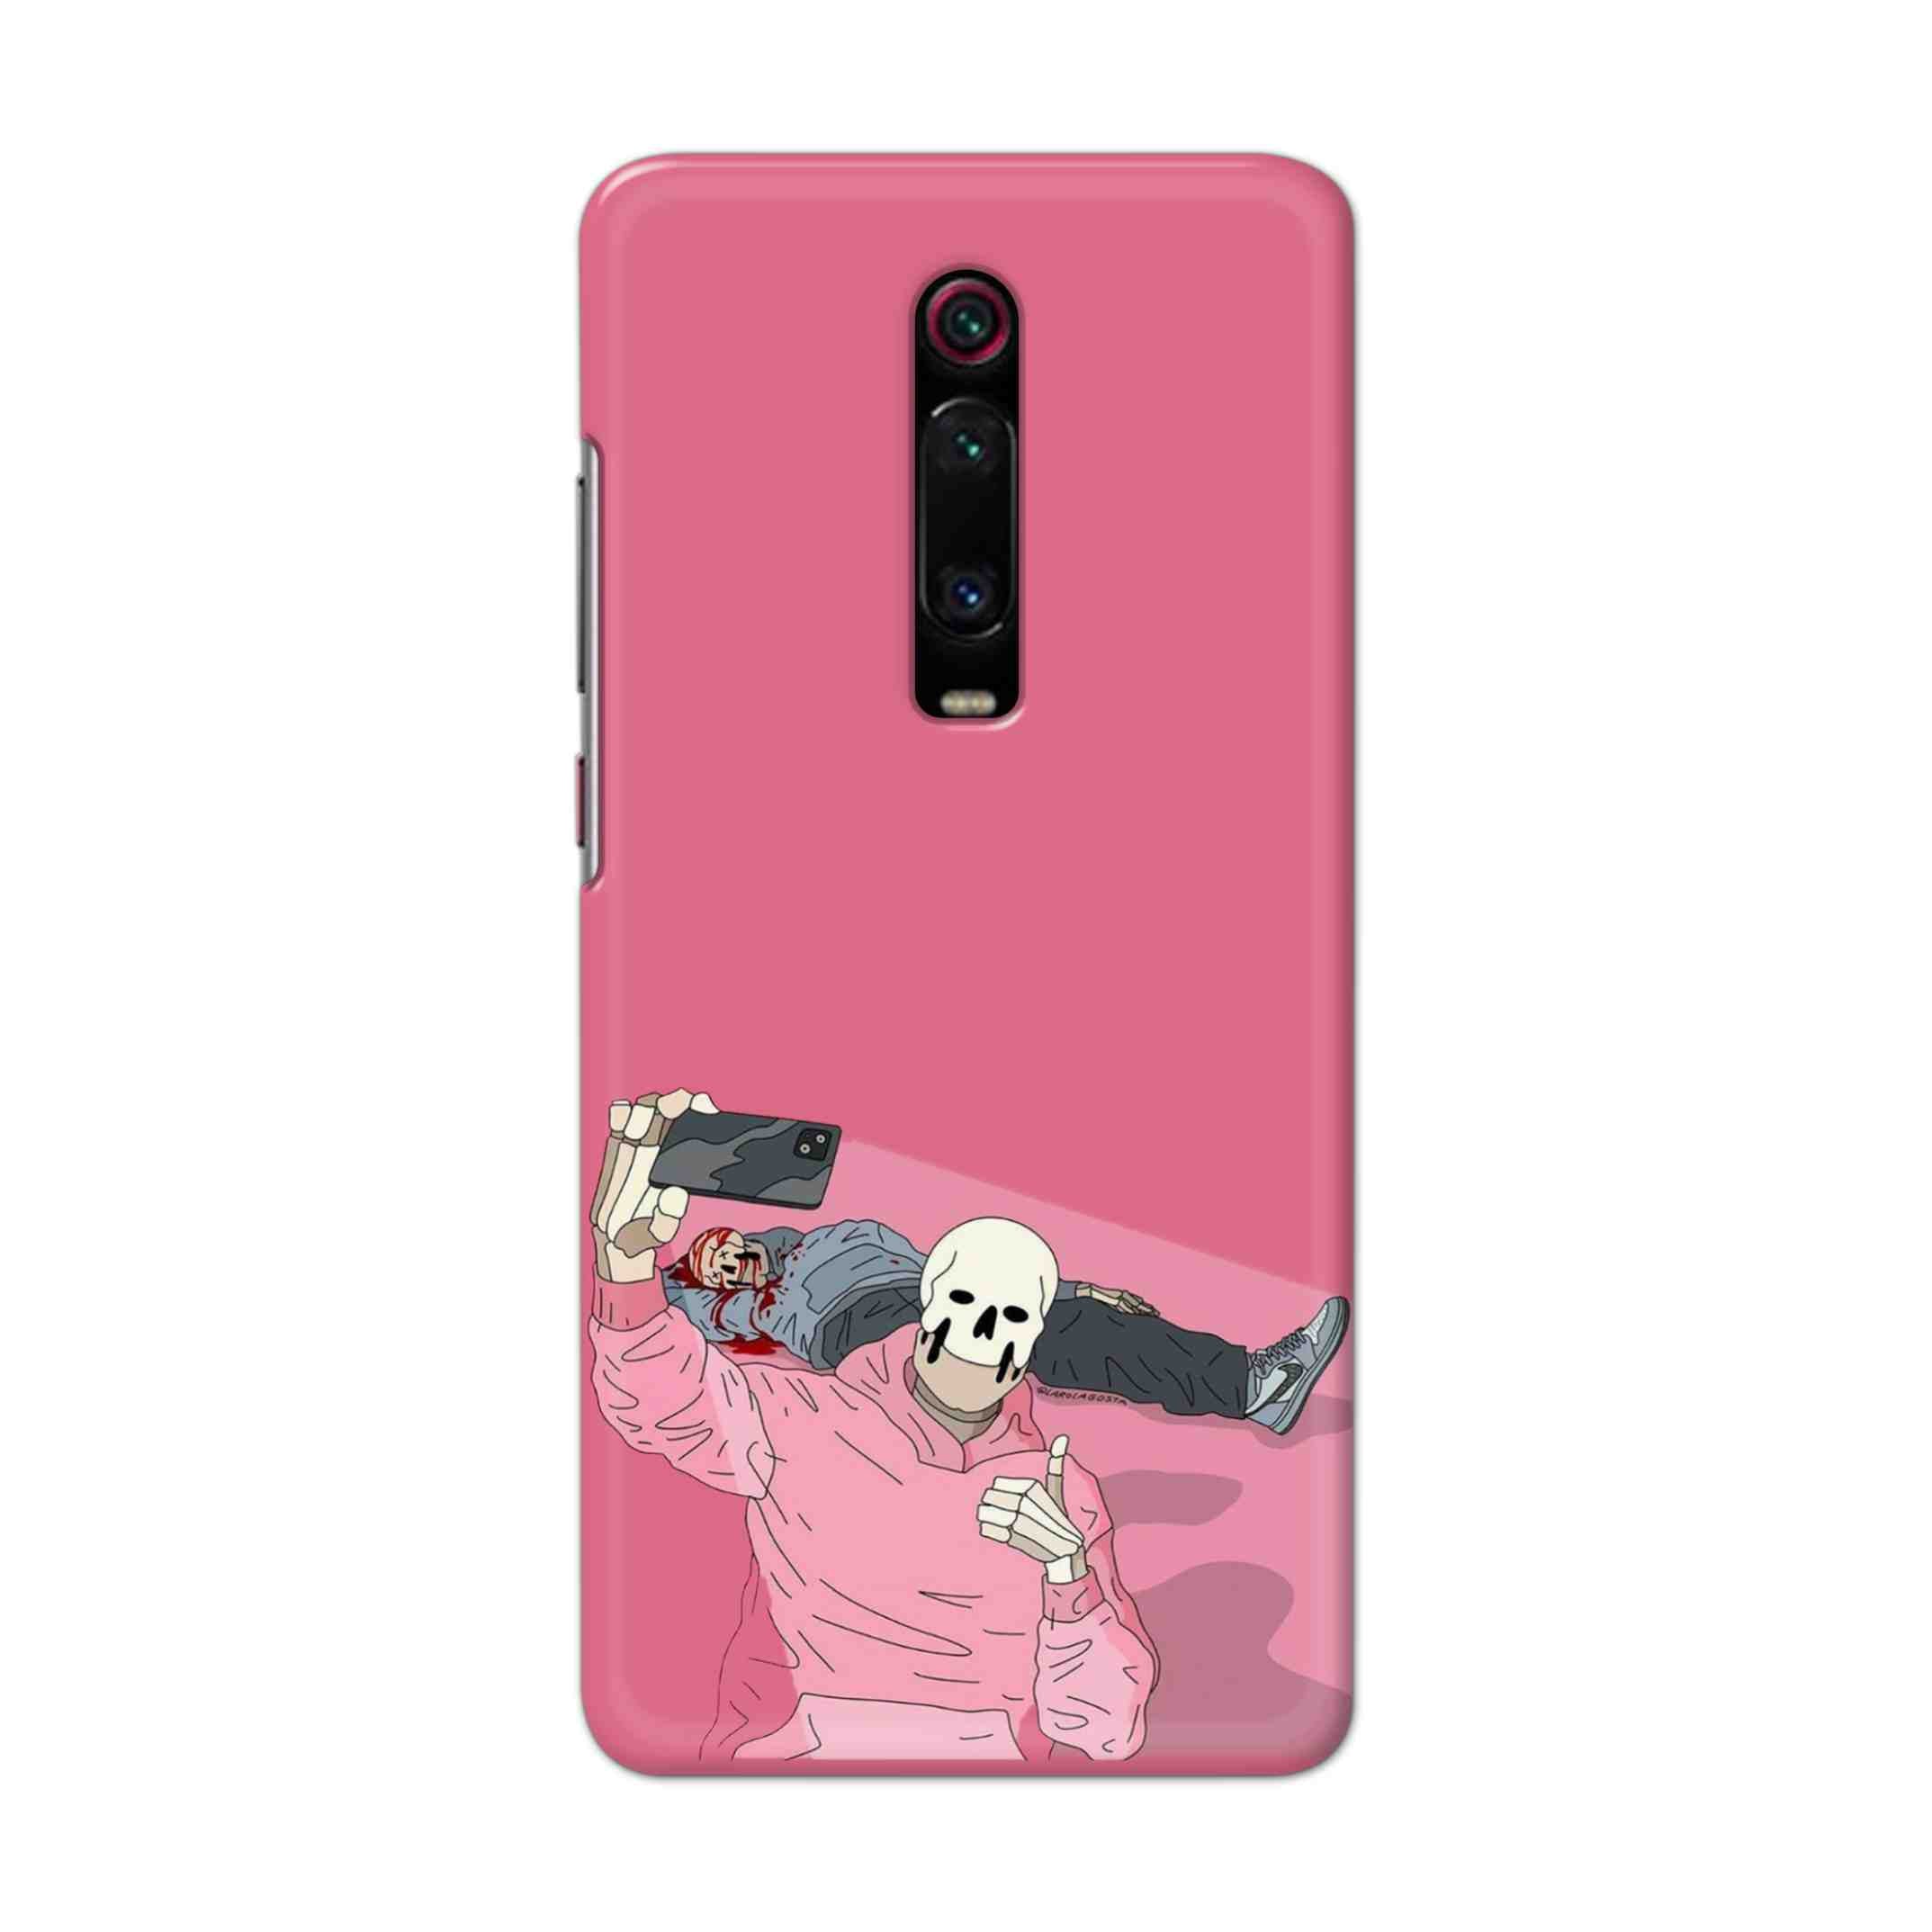 Buy Selfie Hard Back Mobile Phone Case Cover For Xiaomi Redmi K20 Online